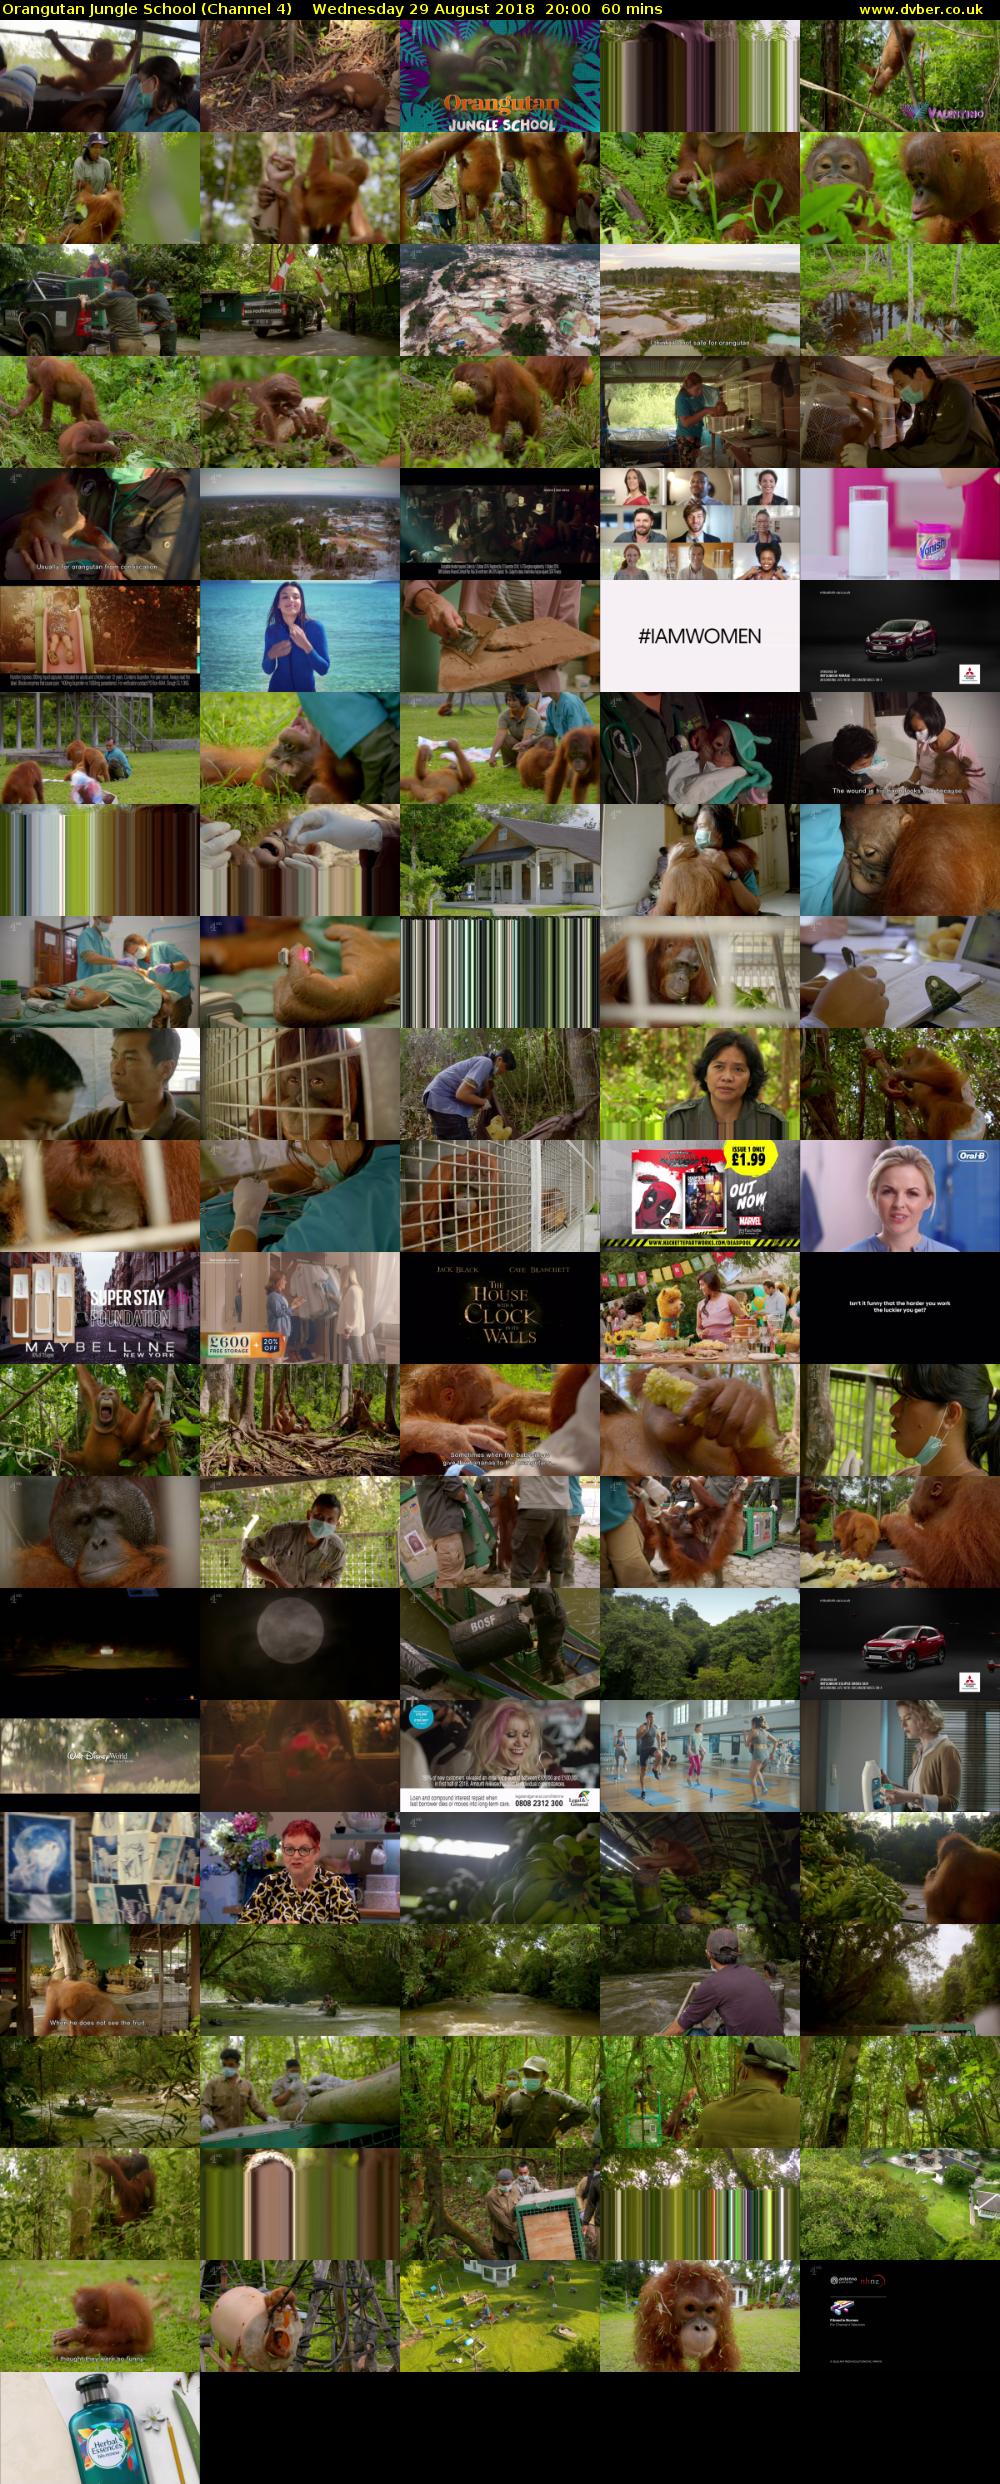 Orangutan Jungle School (Channel 4) Wednesday 29 August 2018 20:00 - 21:00